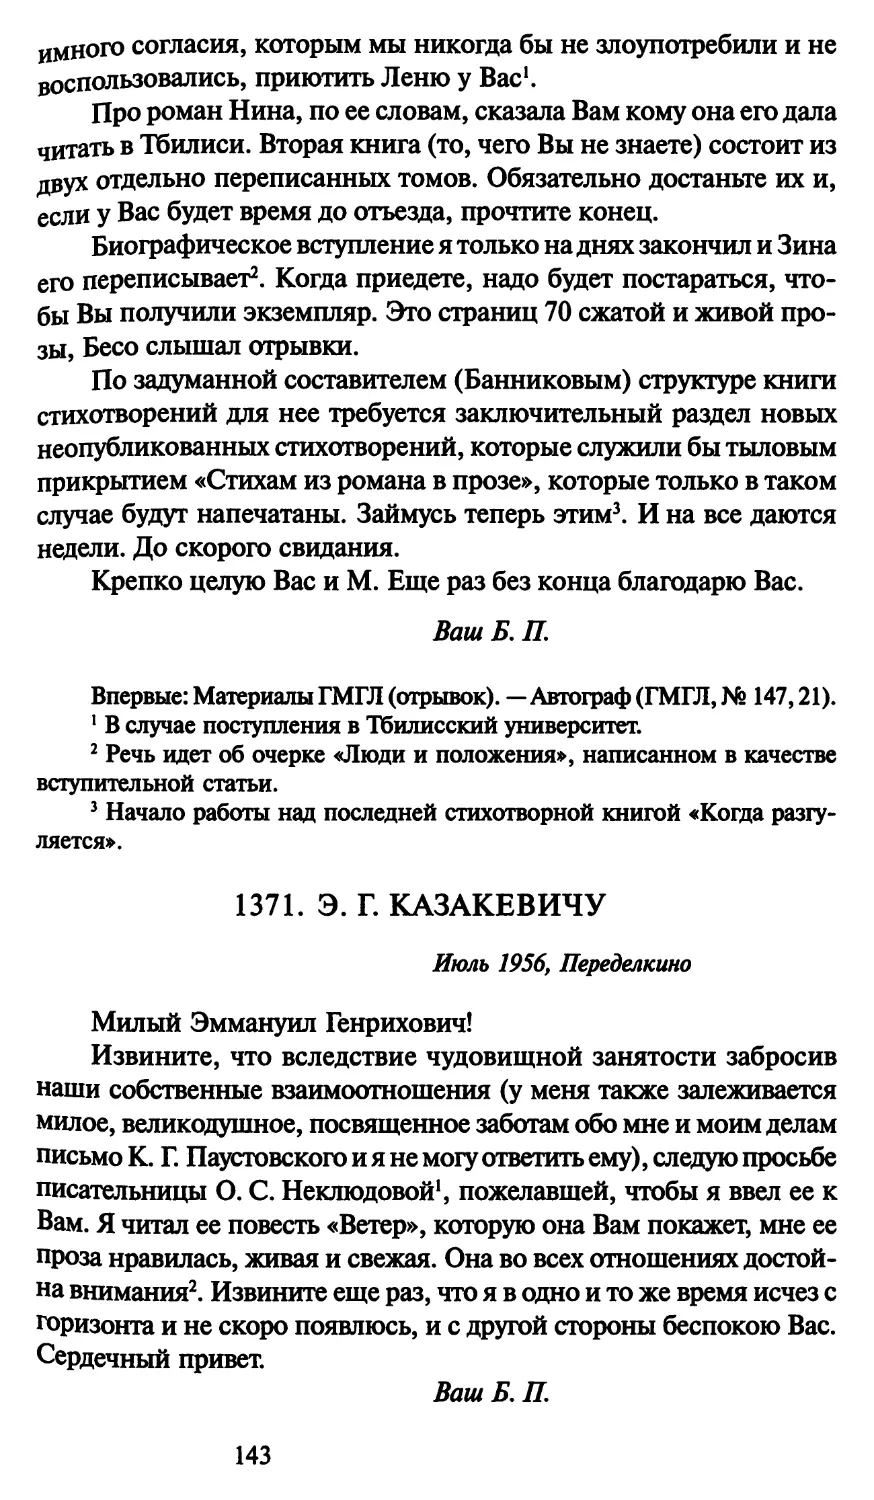 1371. Э. Г. Казакевичу июль 1956